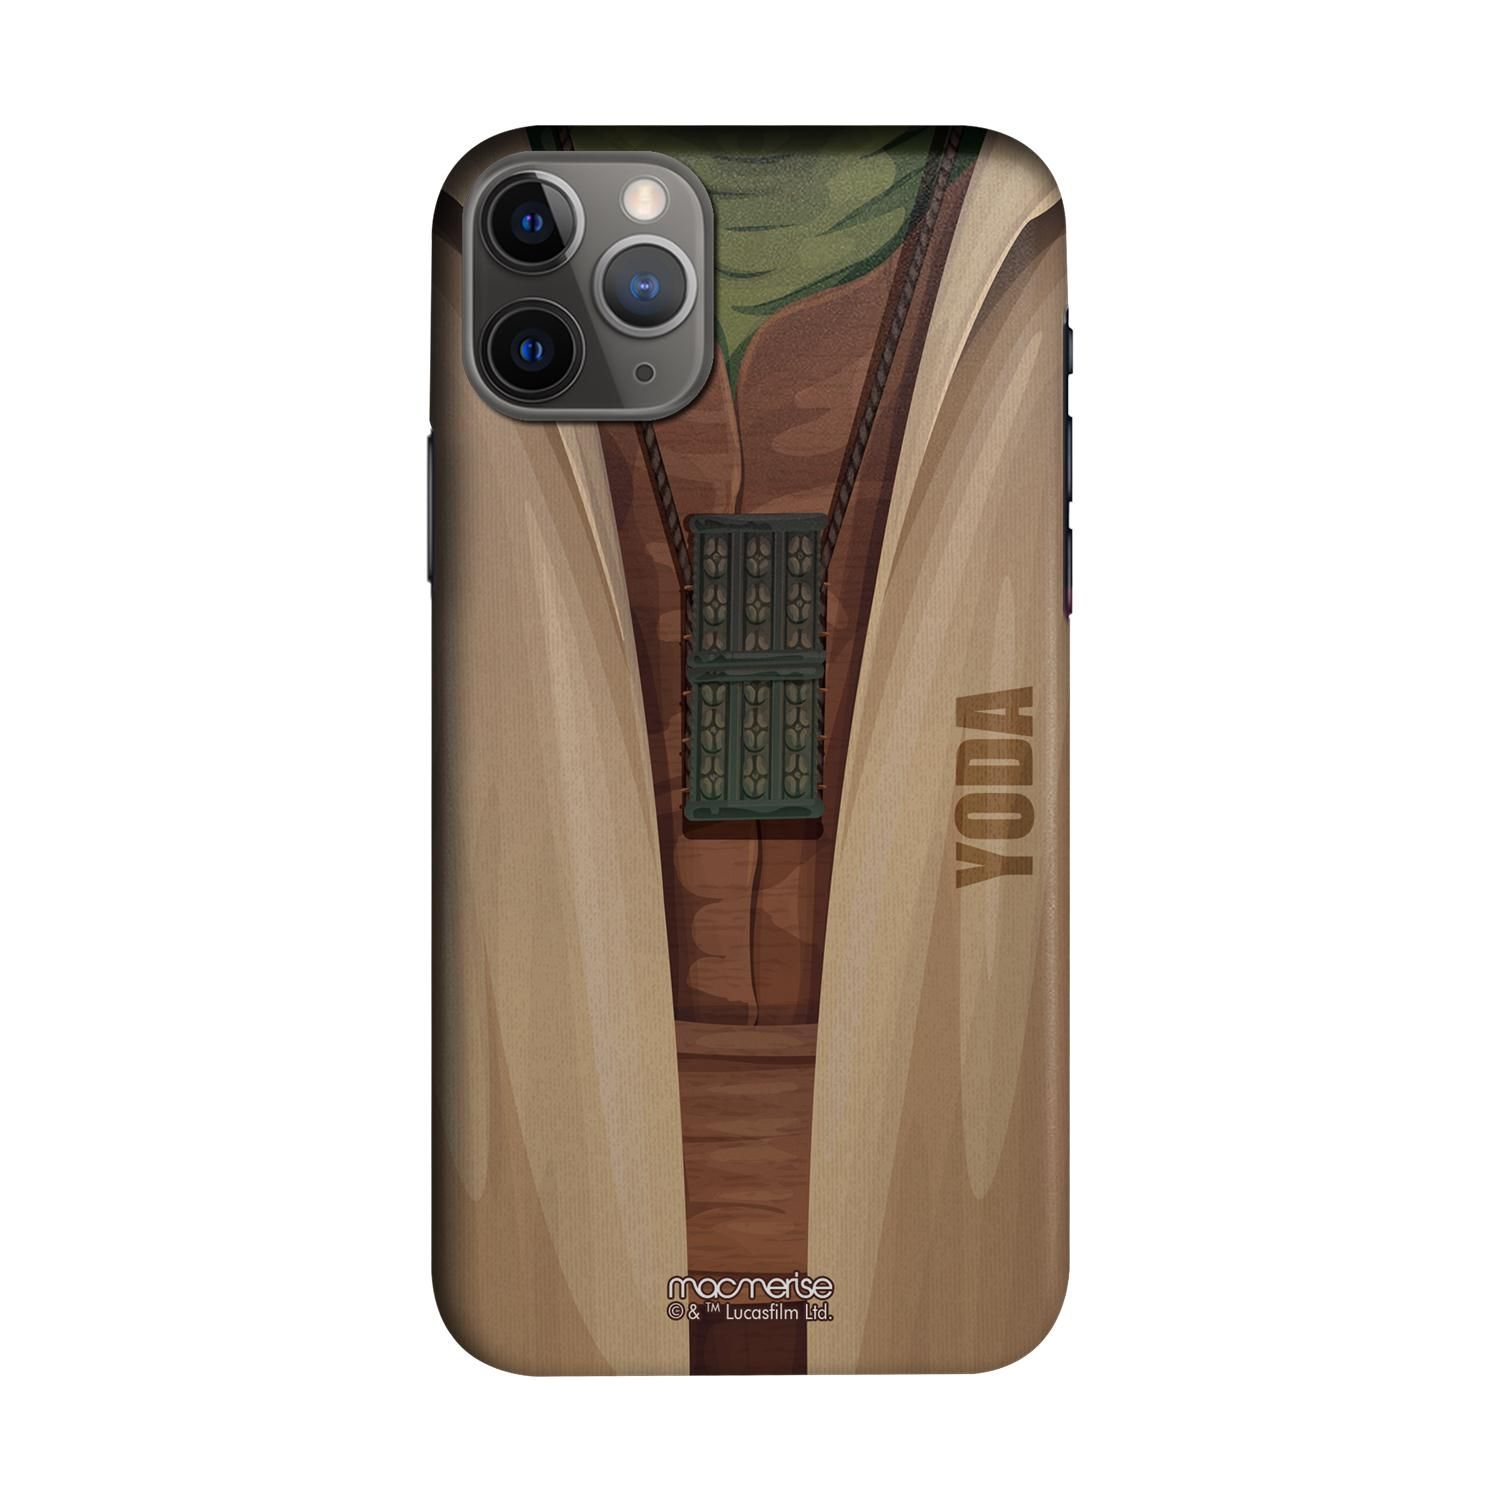 Buy Attire Yoda - Sleek Phone Case for iPhone 11 Pro Max Online